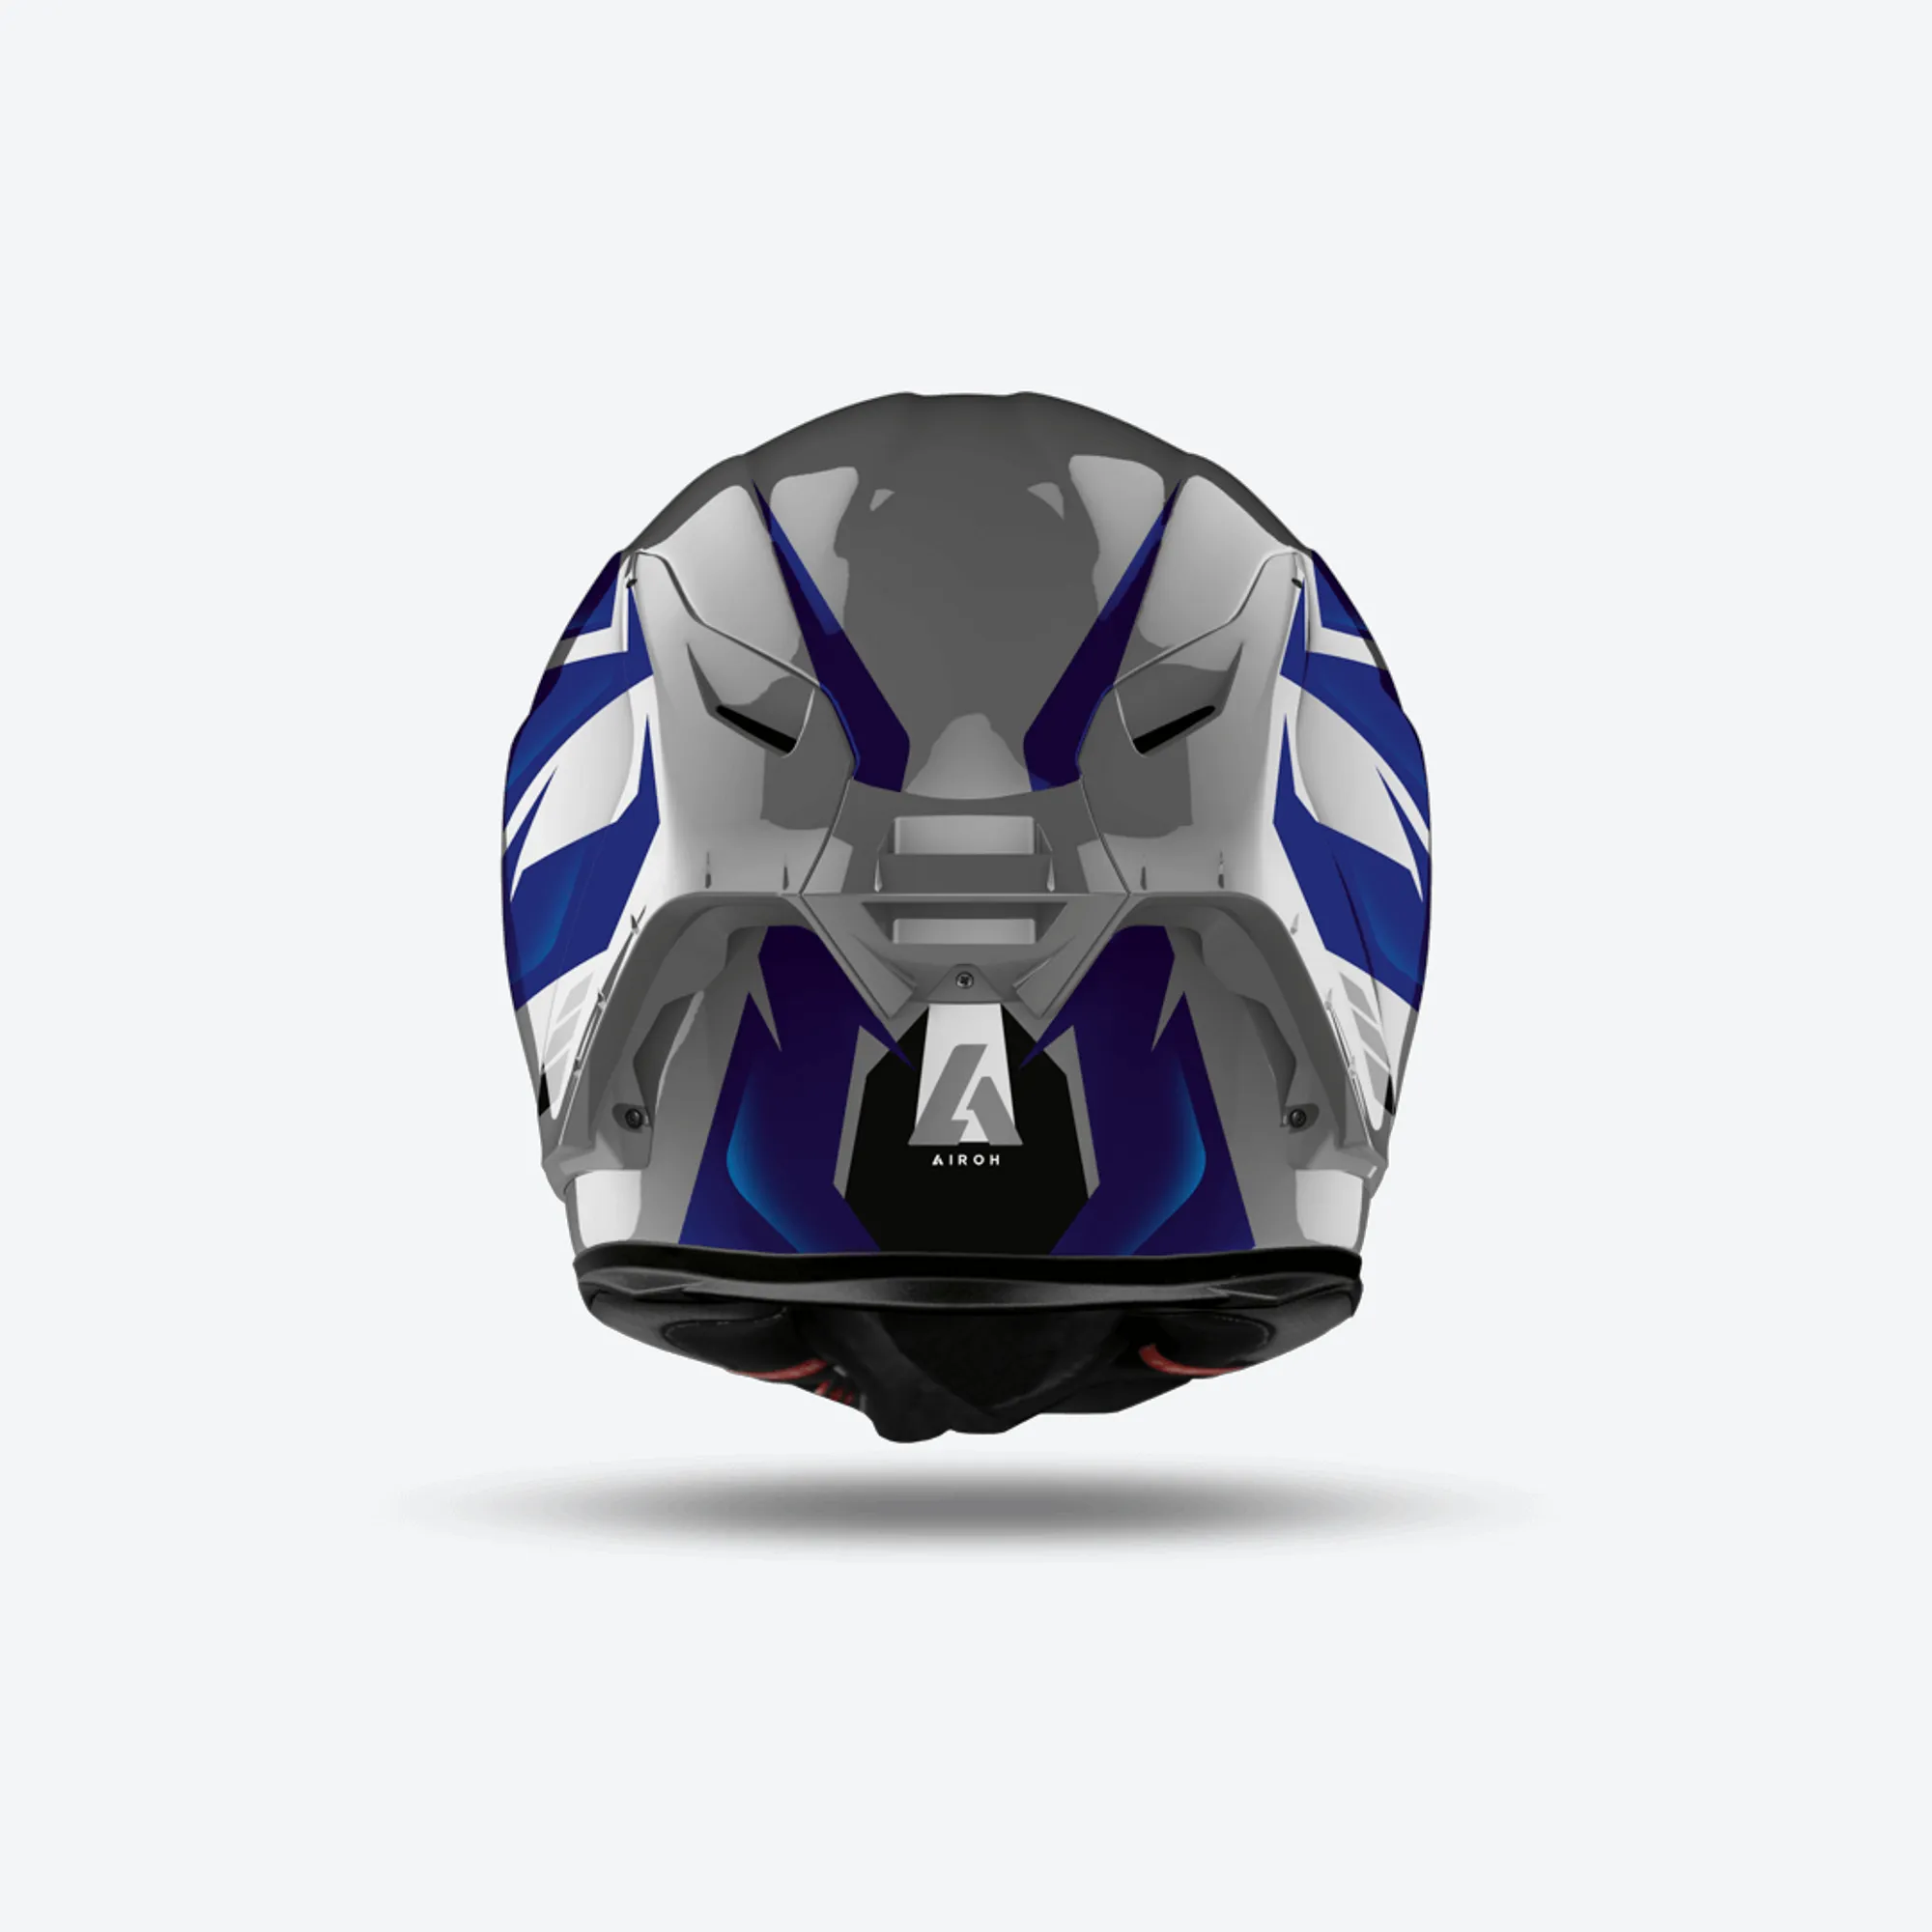 AIROH Casco integrale moto GP550 S WANDER strada pista racing – FutureMoto  Ricambi